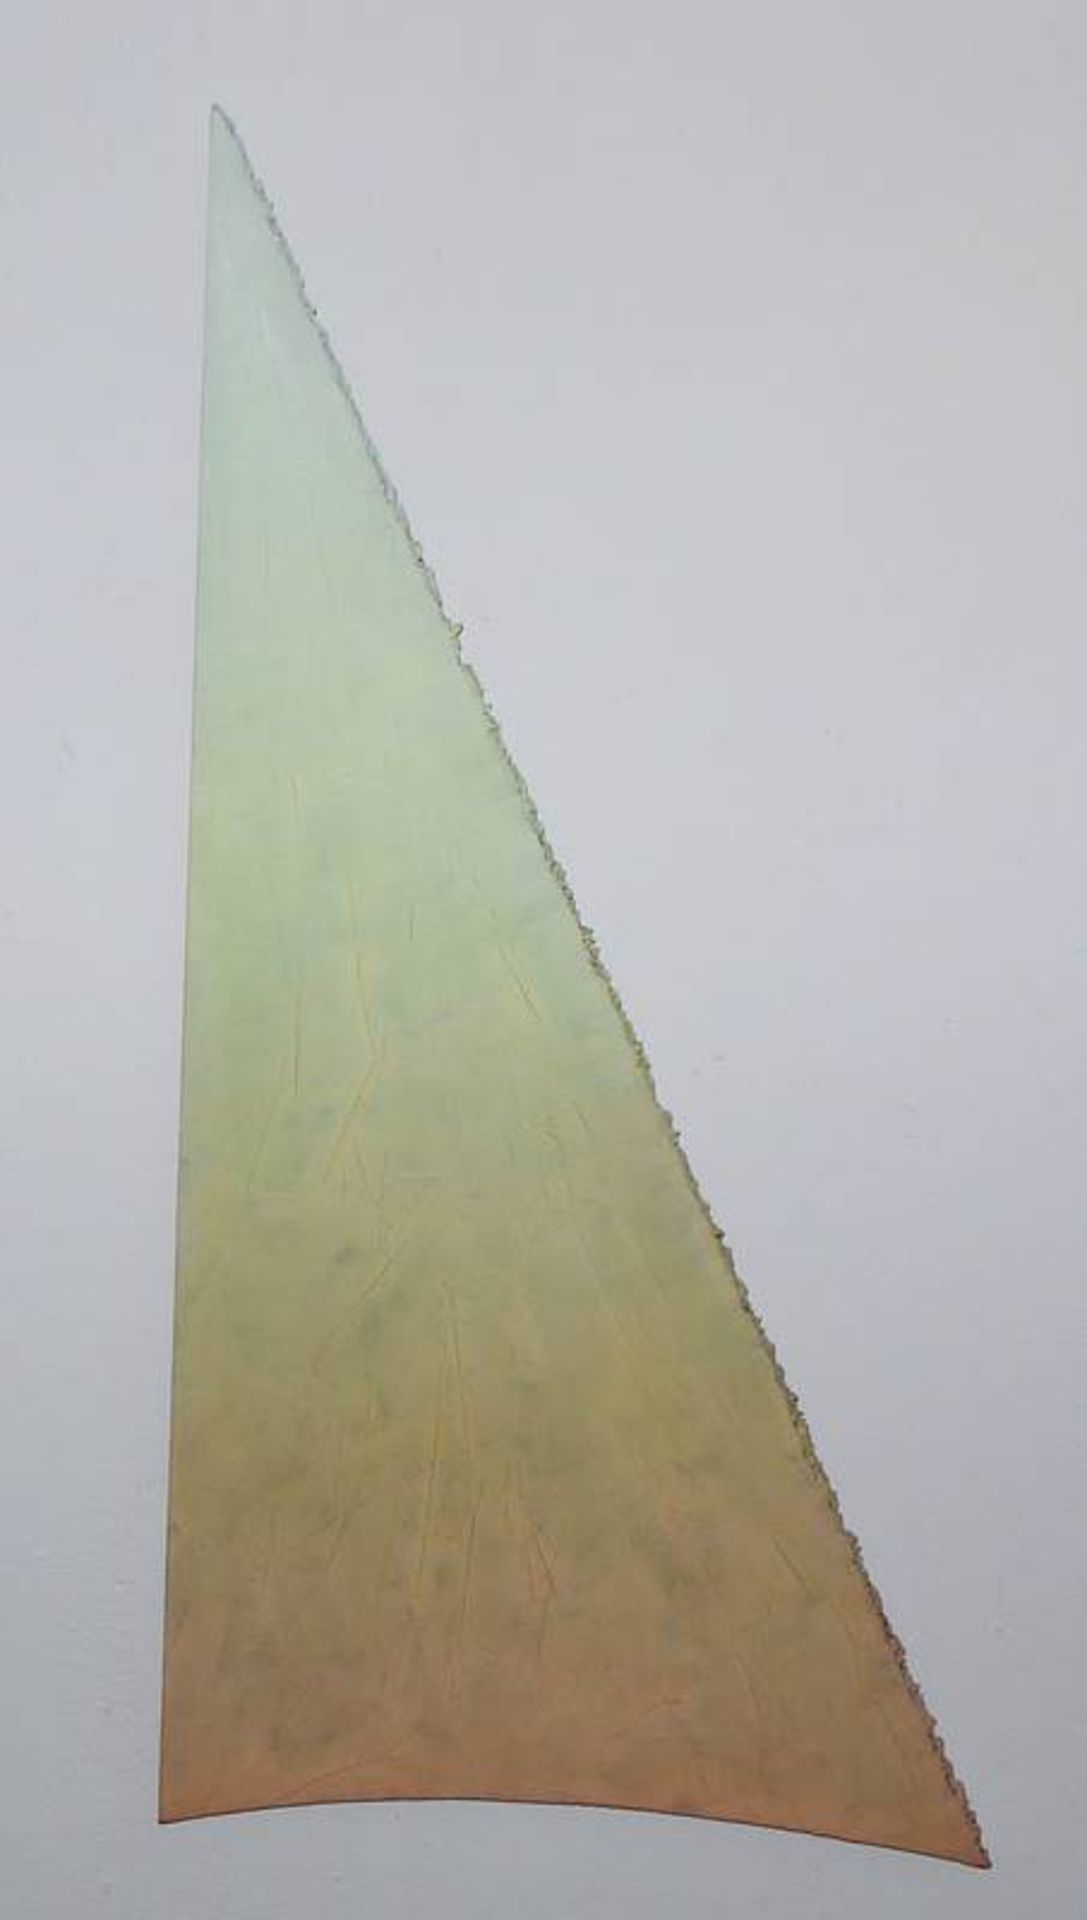 Raimer Jochims, "Oiselet", acrylic, wall object, (19)80-88-90